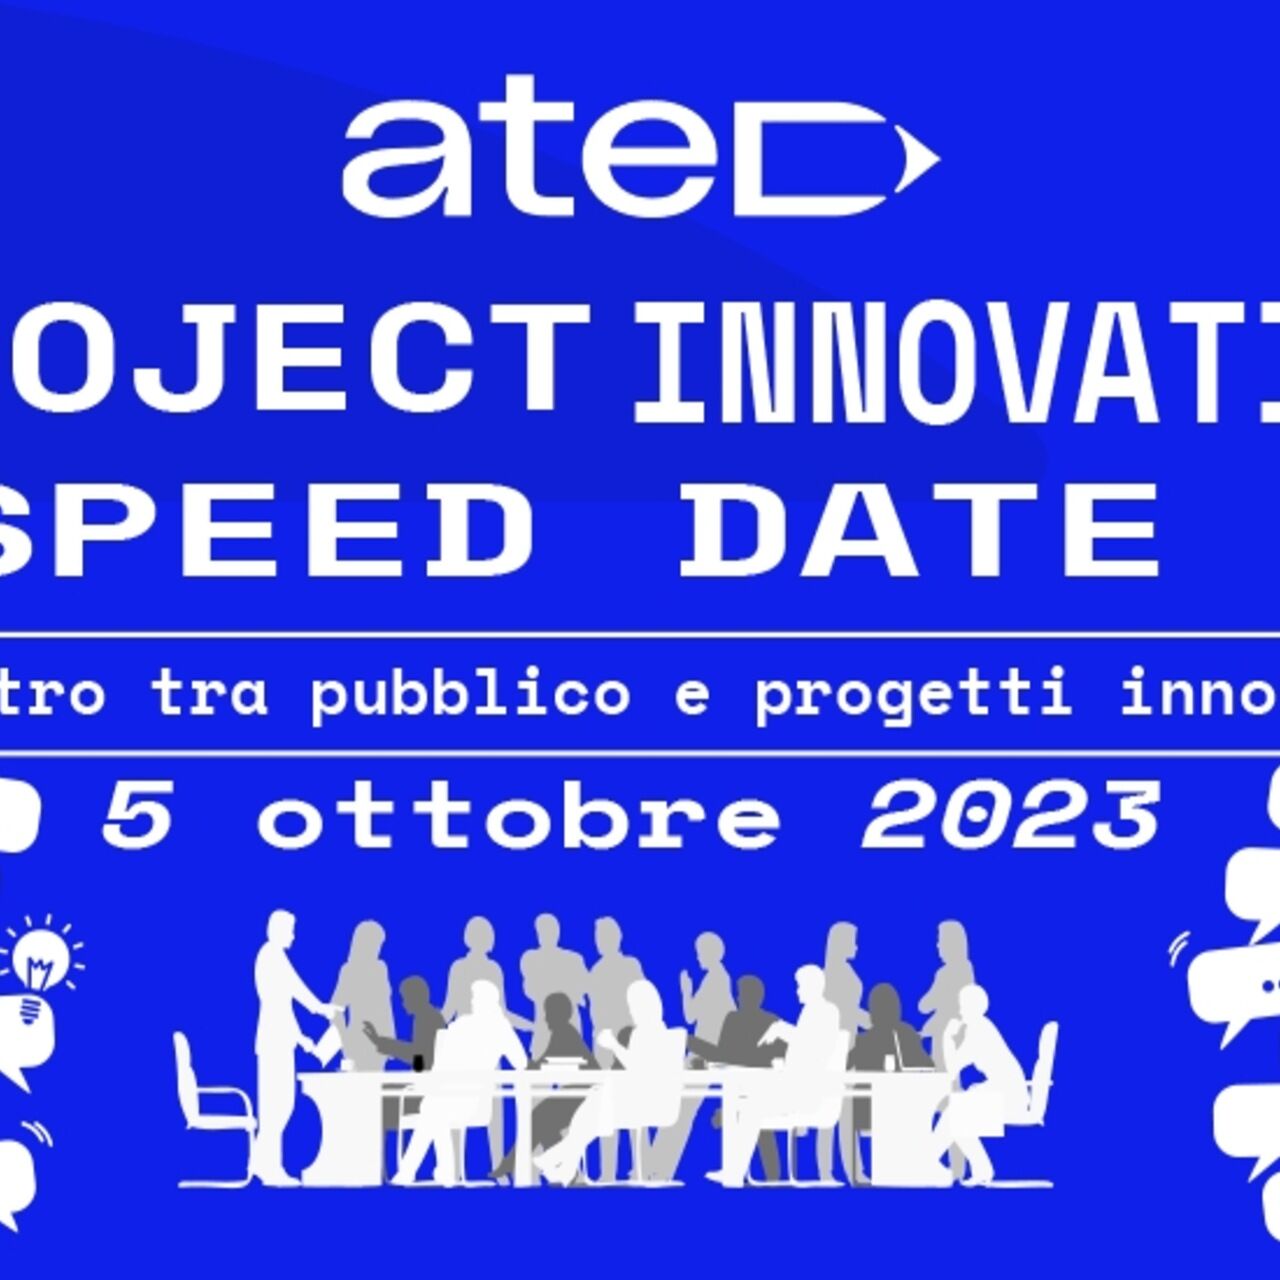 ATED Project Innovation Speed Date: la locandina e key visual